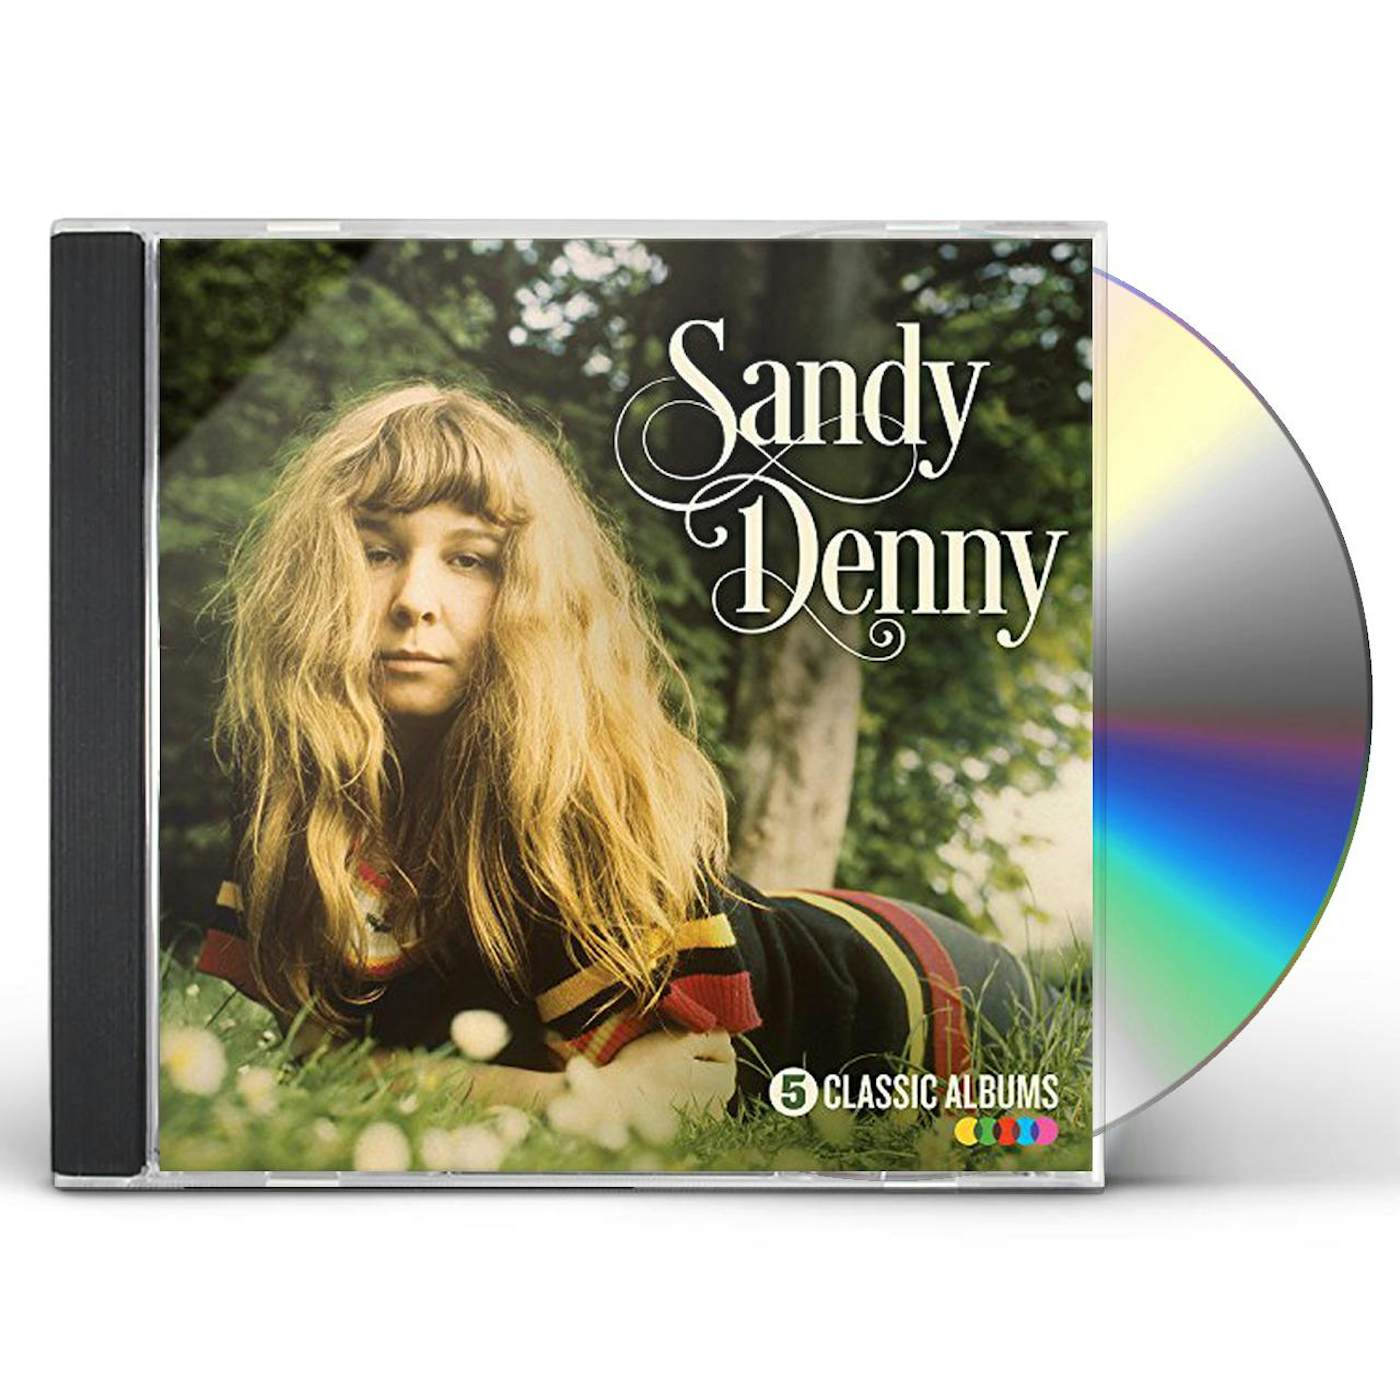 Sandy Denny 5 CLASSIC ALBUMS CD